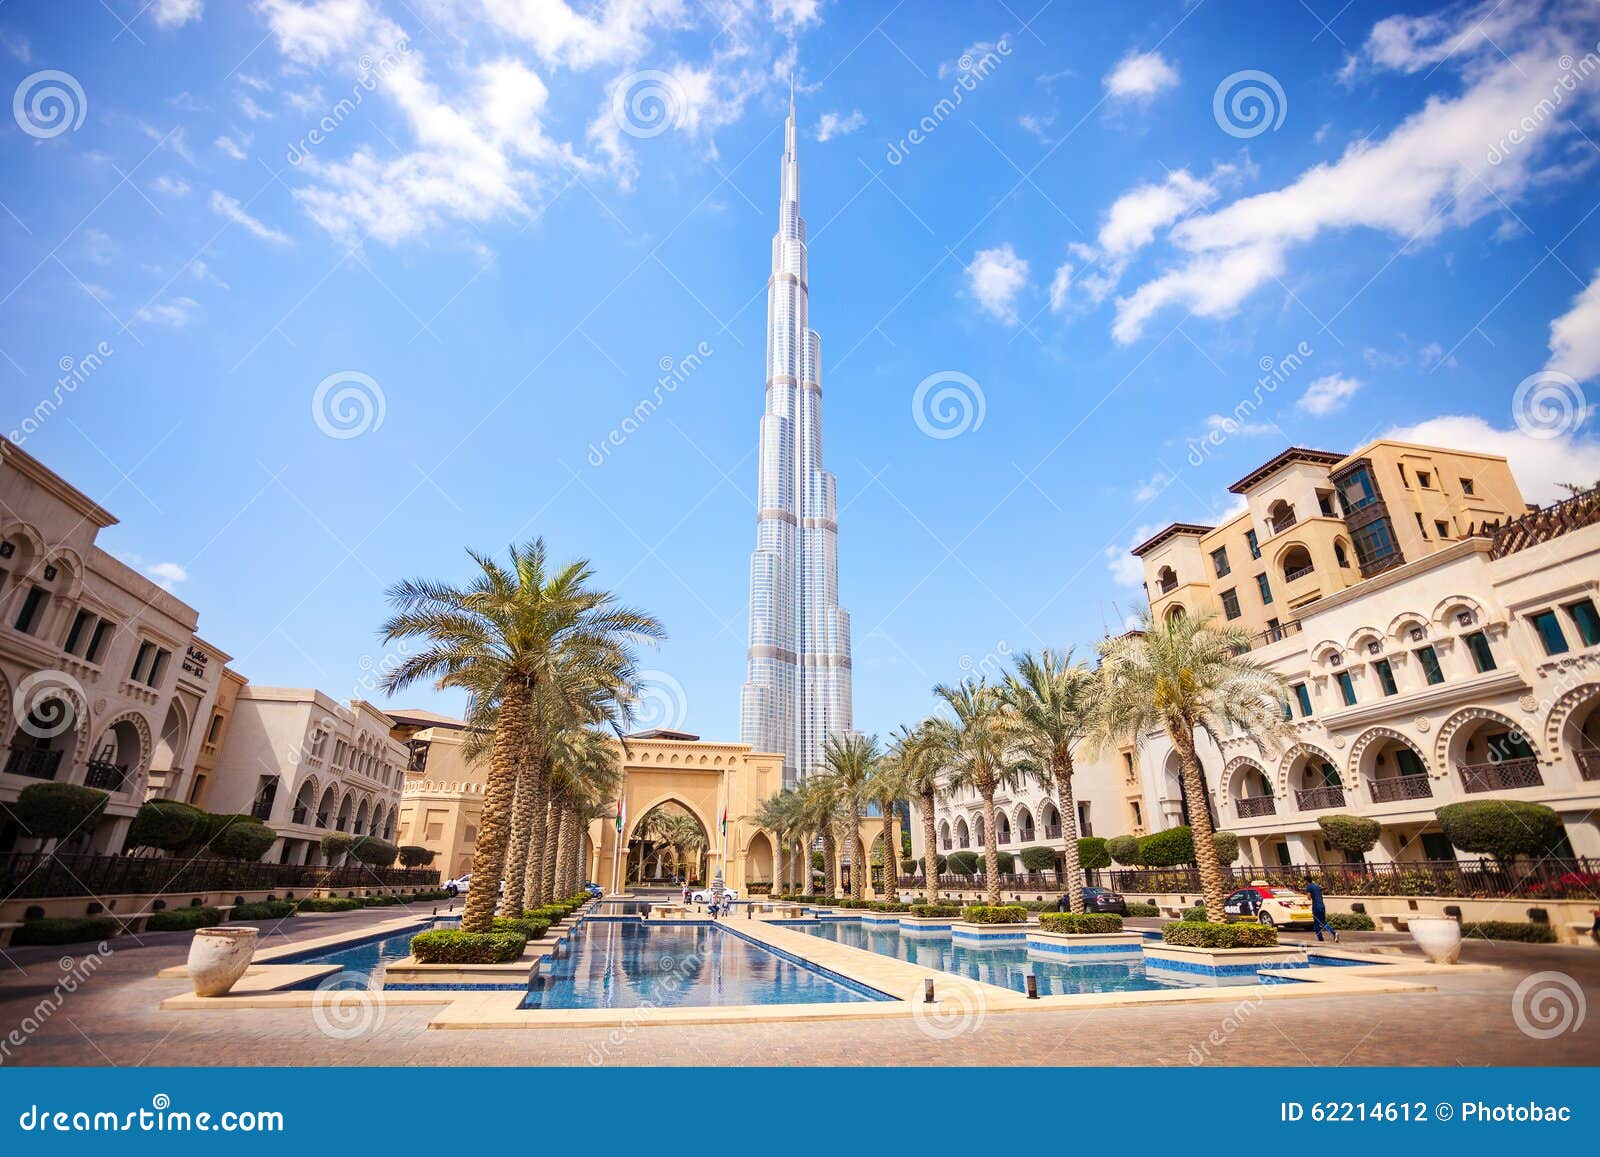 dubai, uae - february 24 - burj khalifa, the highest building in the world, 829.8 m tall. pic